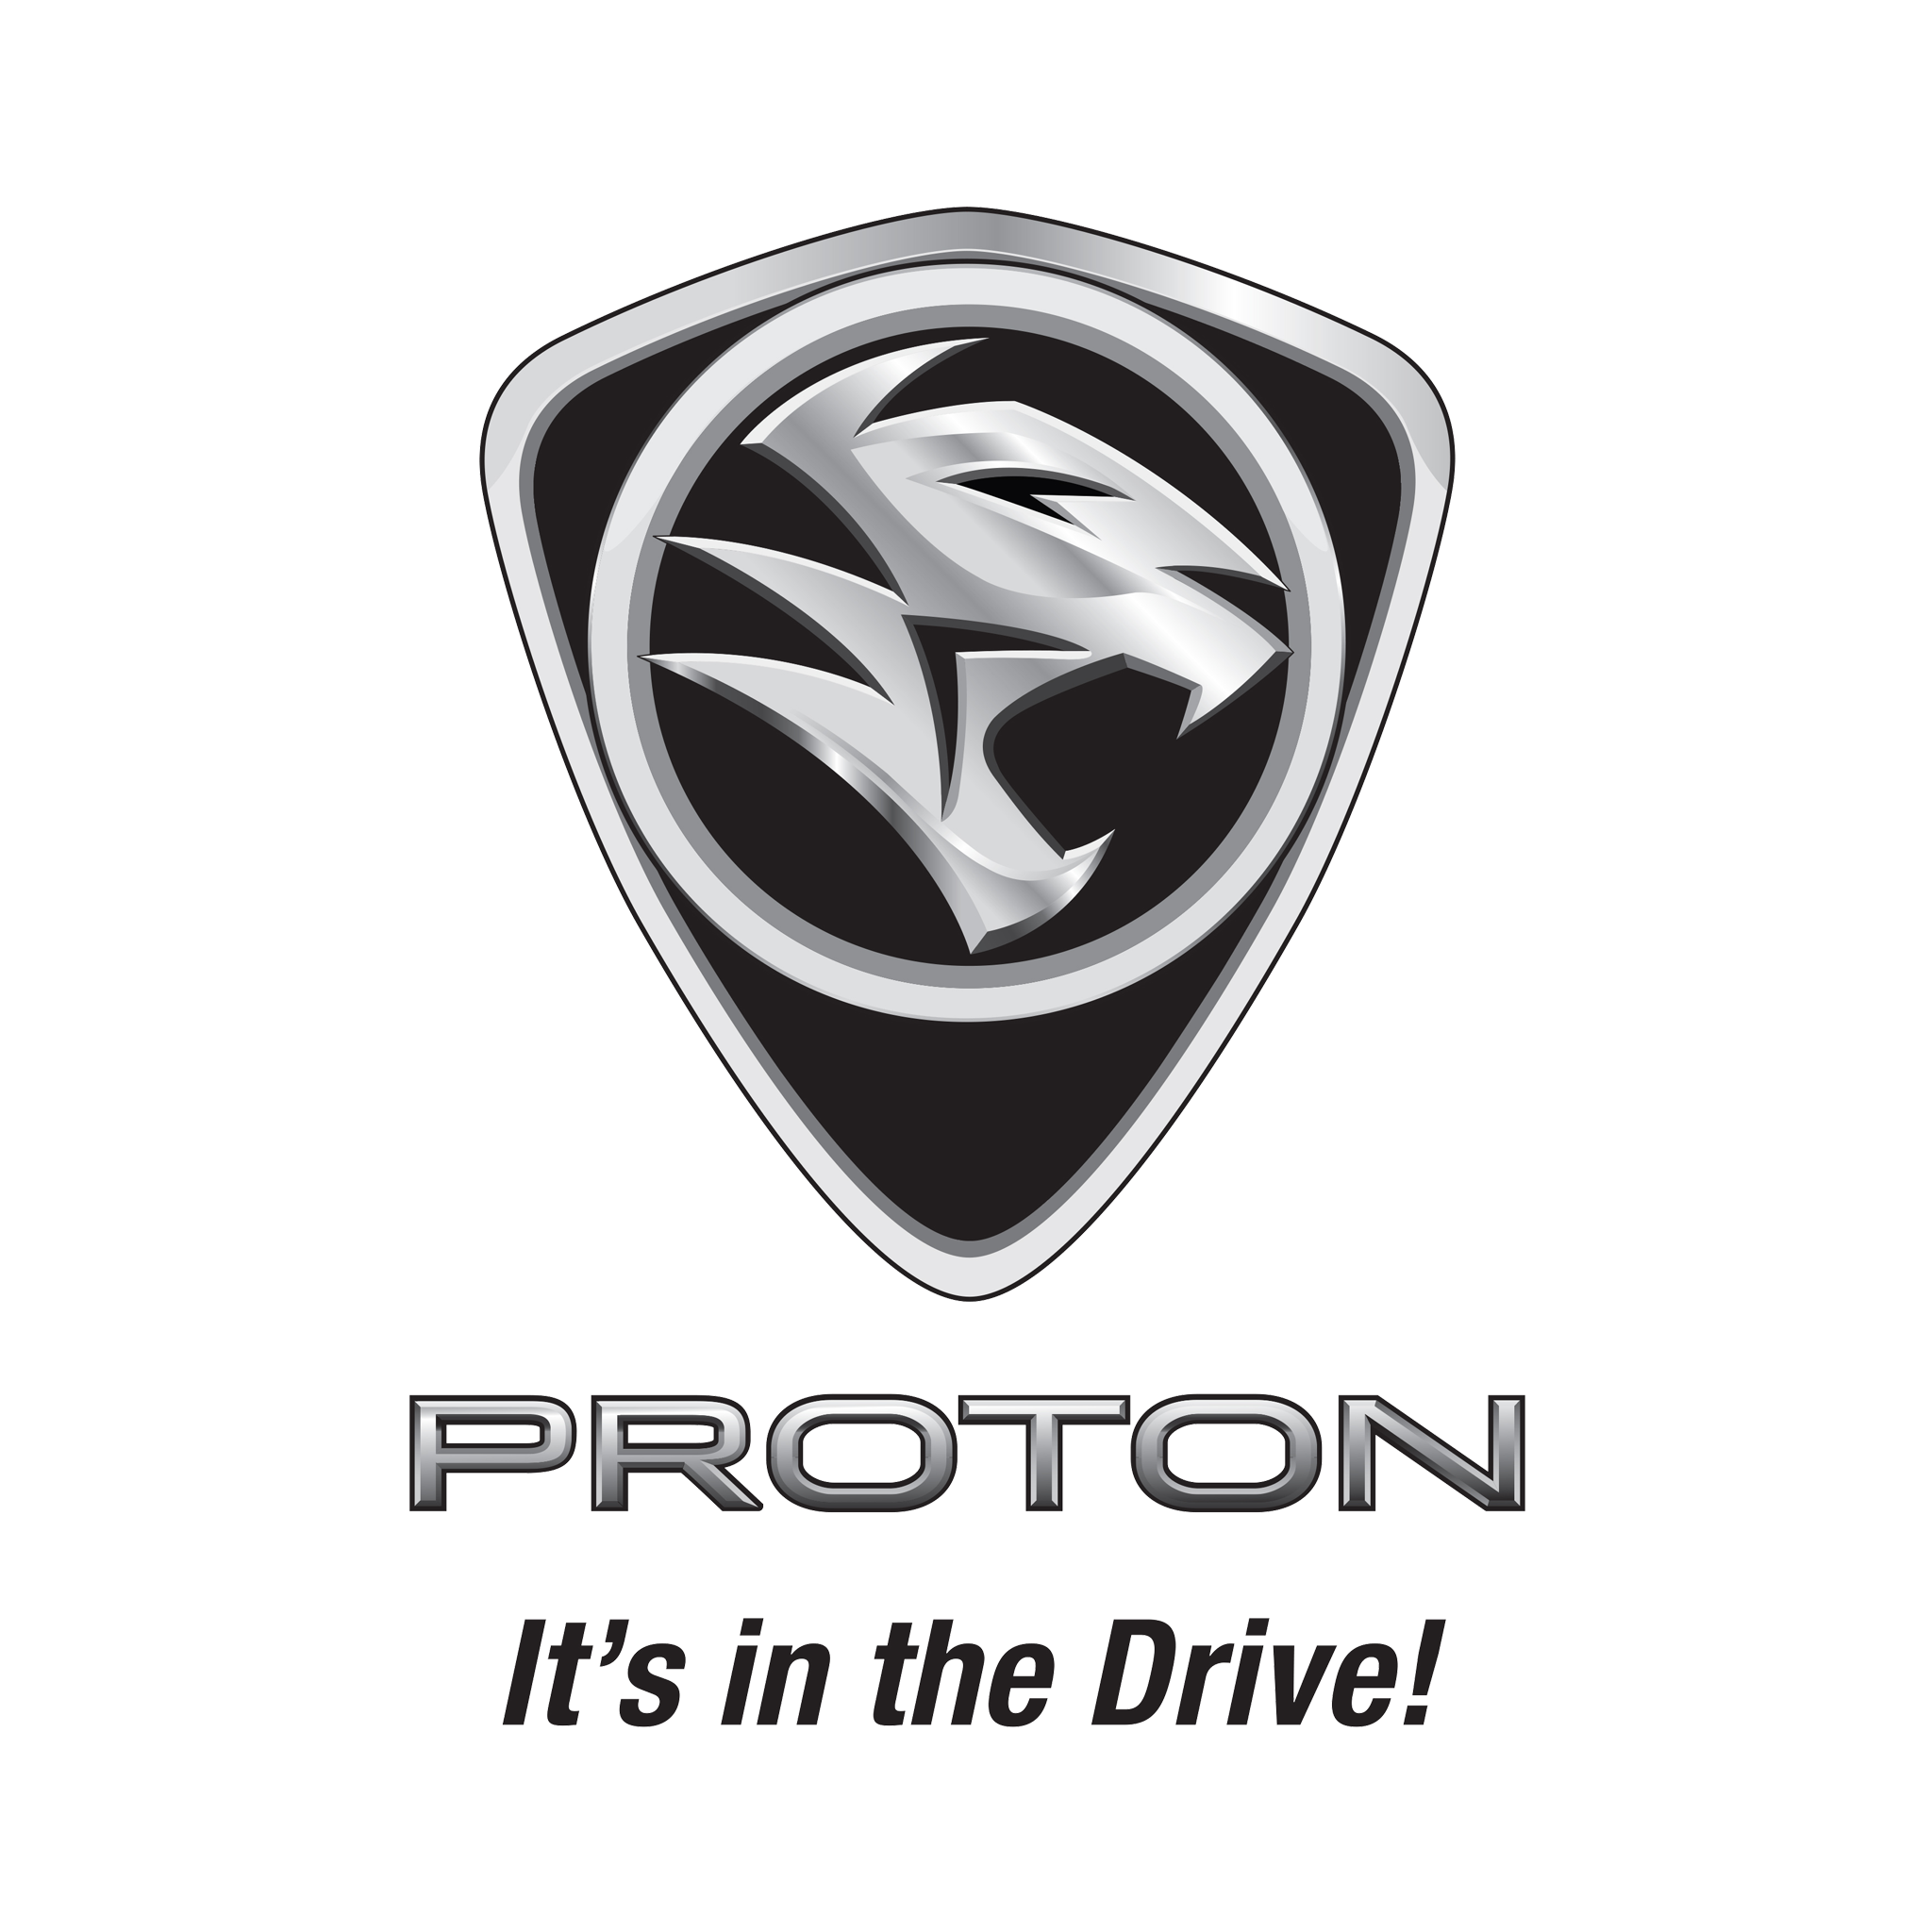 Proton Logo, HD Png, Meaning, Information | Carlogos.org